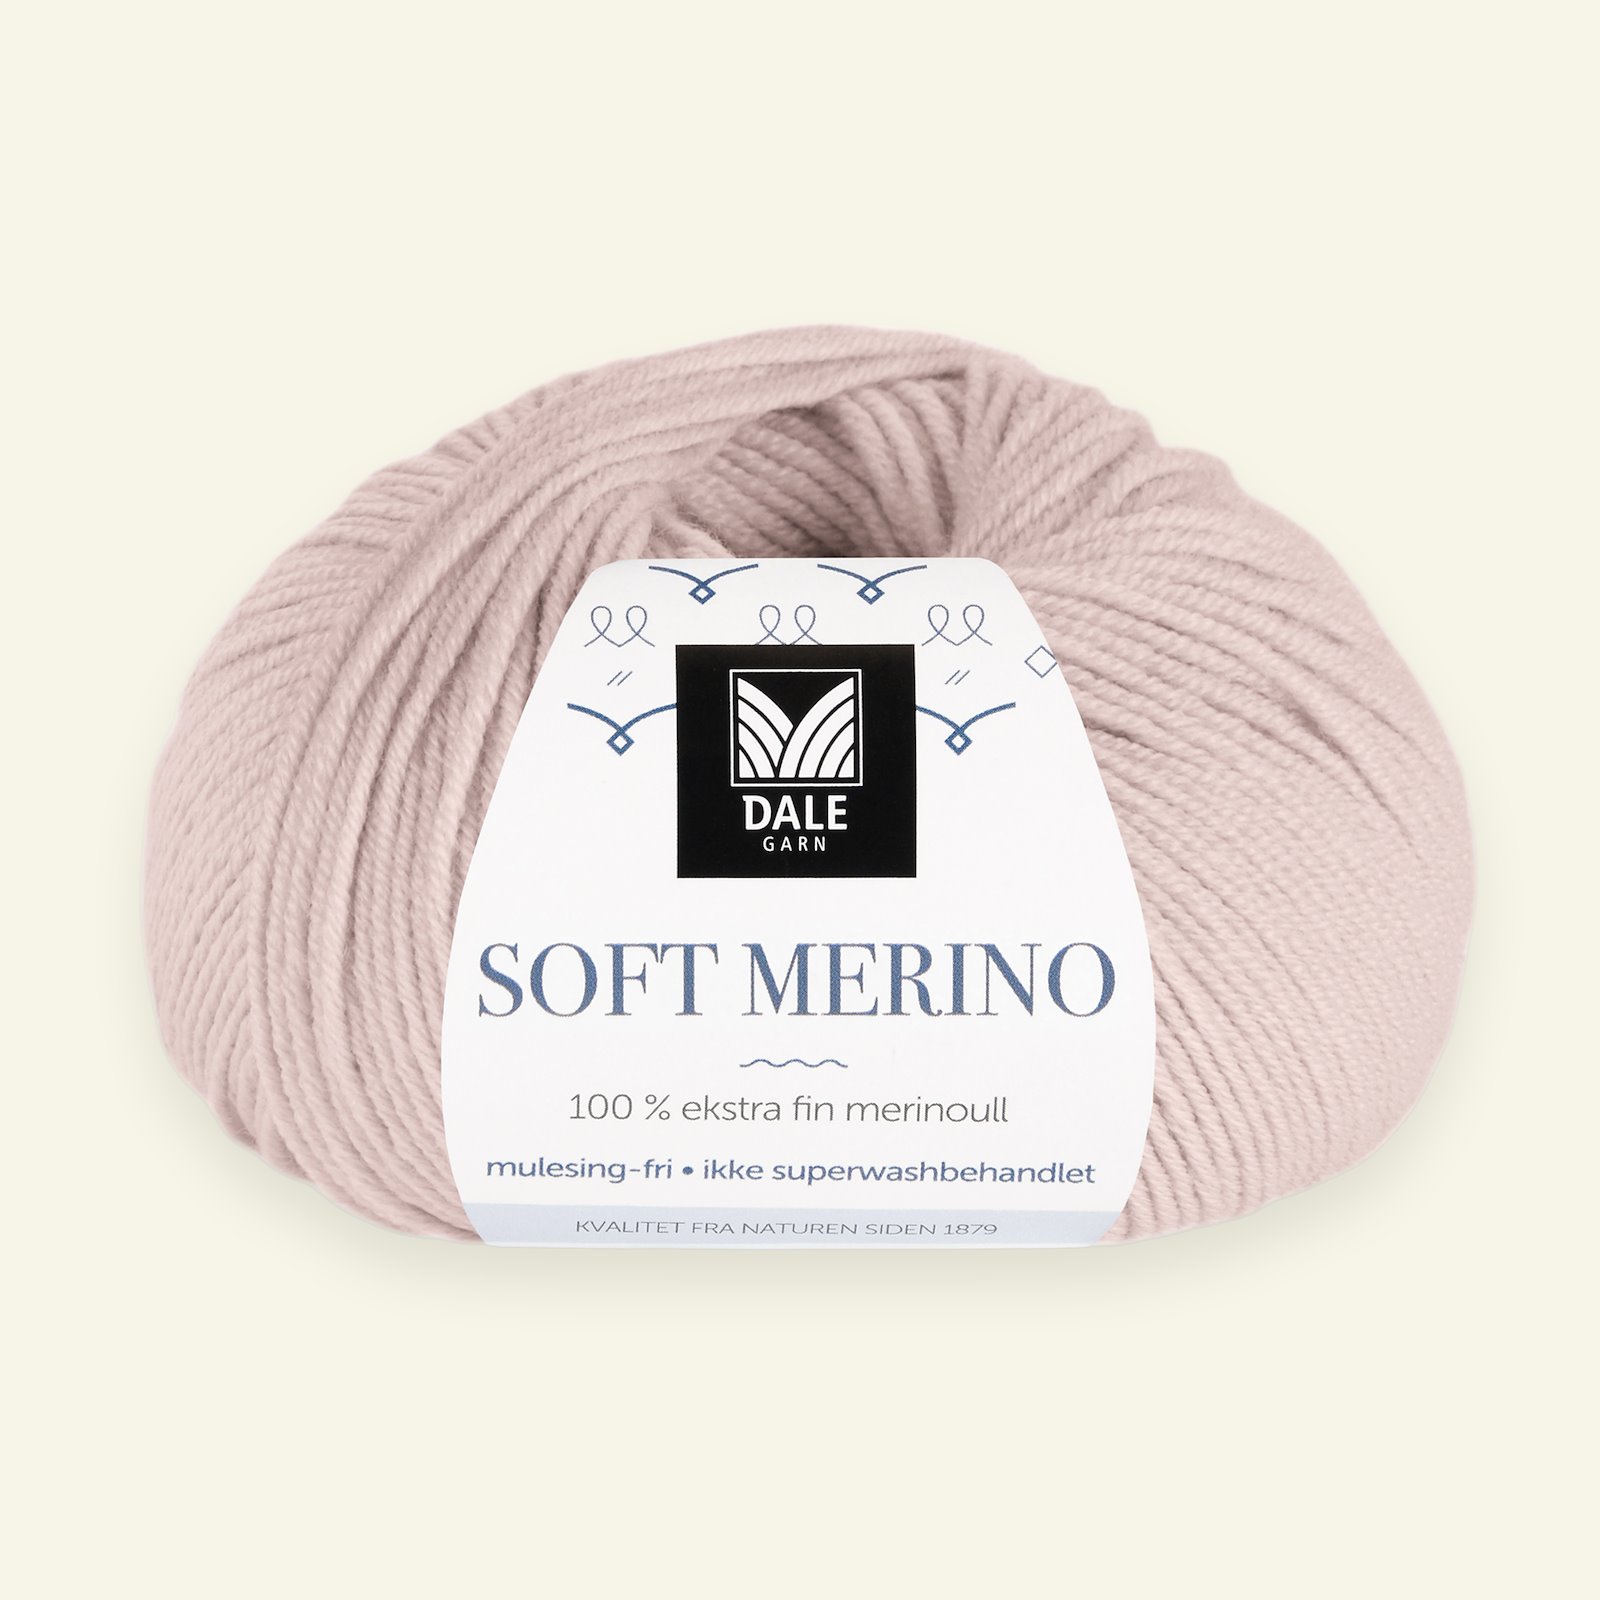 Dale Garn, 100% extra fine merino wool yarn, "Soft Merino", dusty rose (3032) 90000353_pack